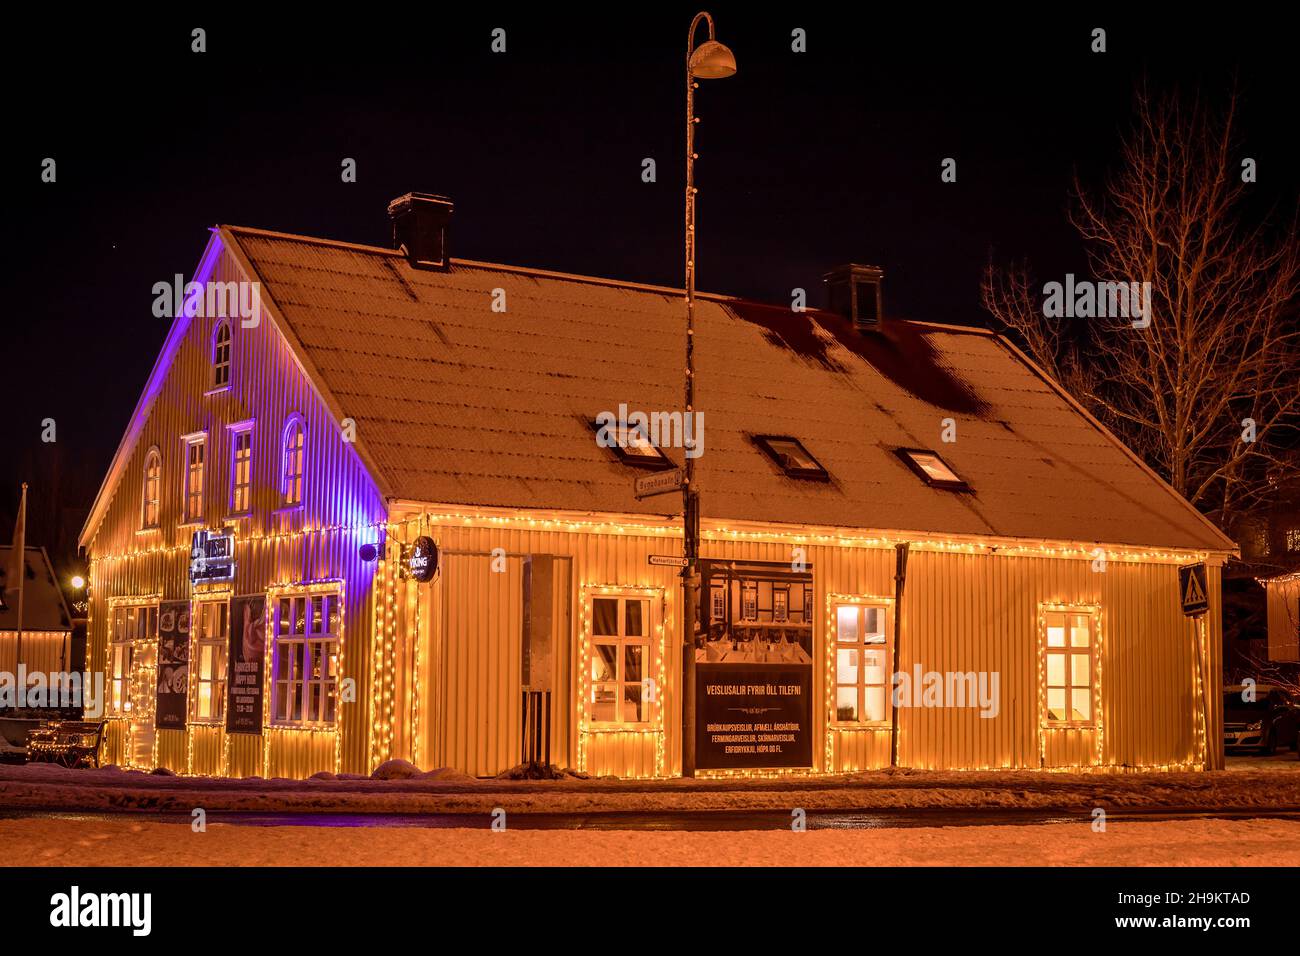 Hafnarfjordur, Iceland - December 4, 2021: Old historical cottage of A. Hansen Restaurant and bar, illuminated with Christmas lights. Winter night. Stock Photo